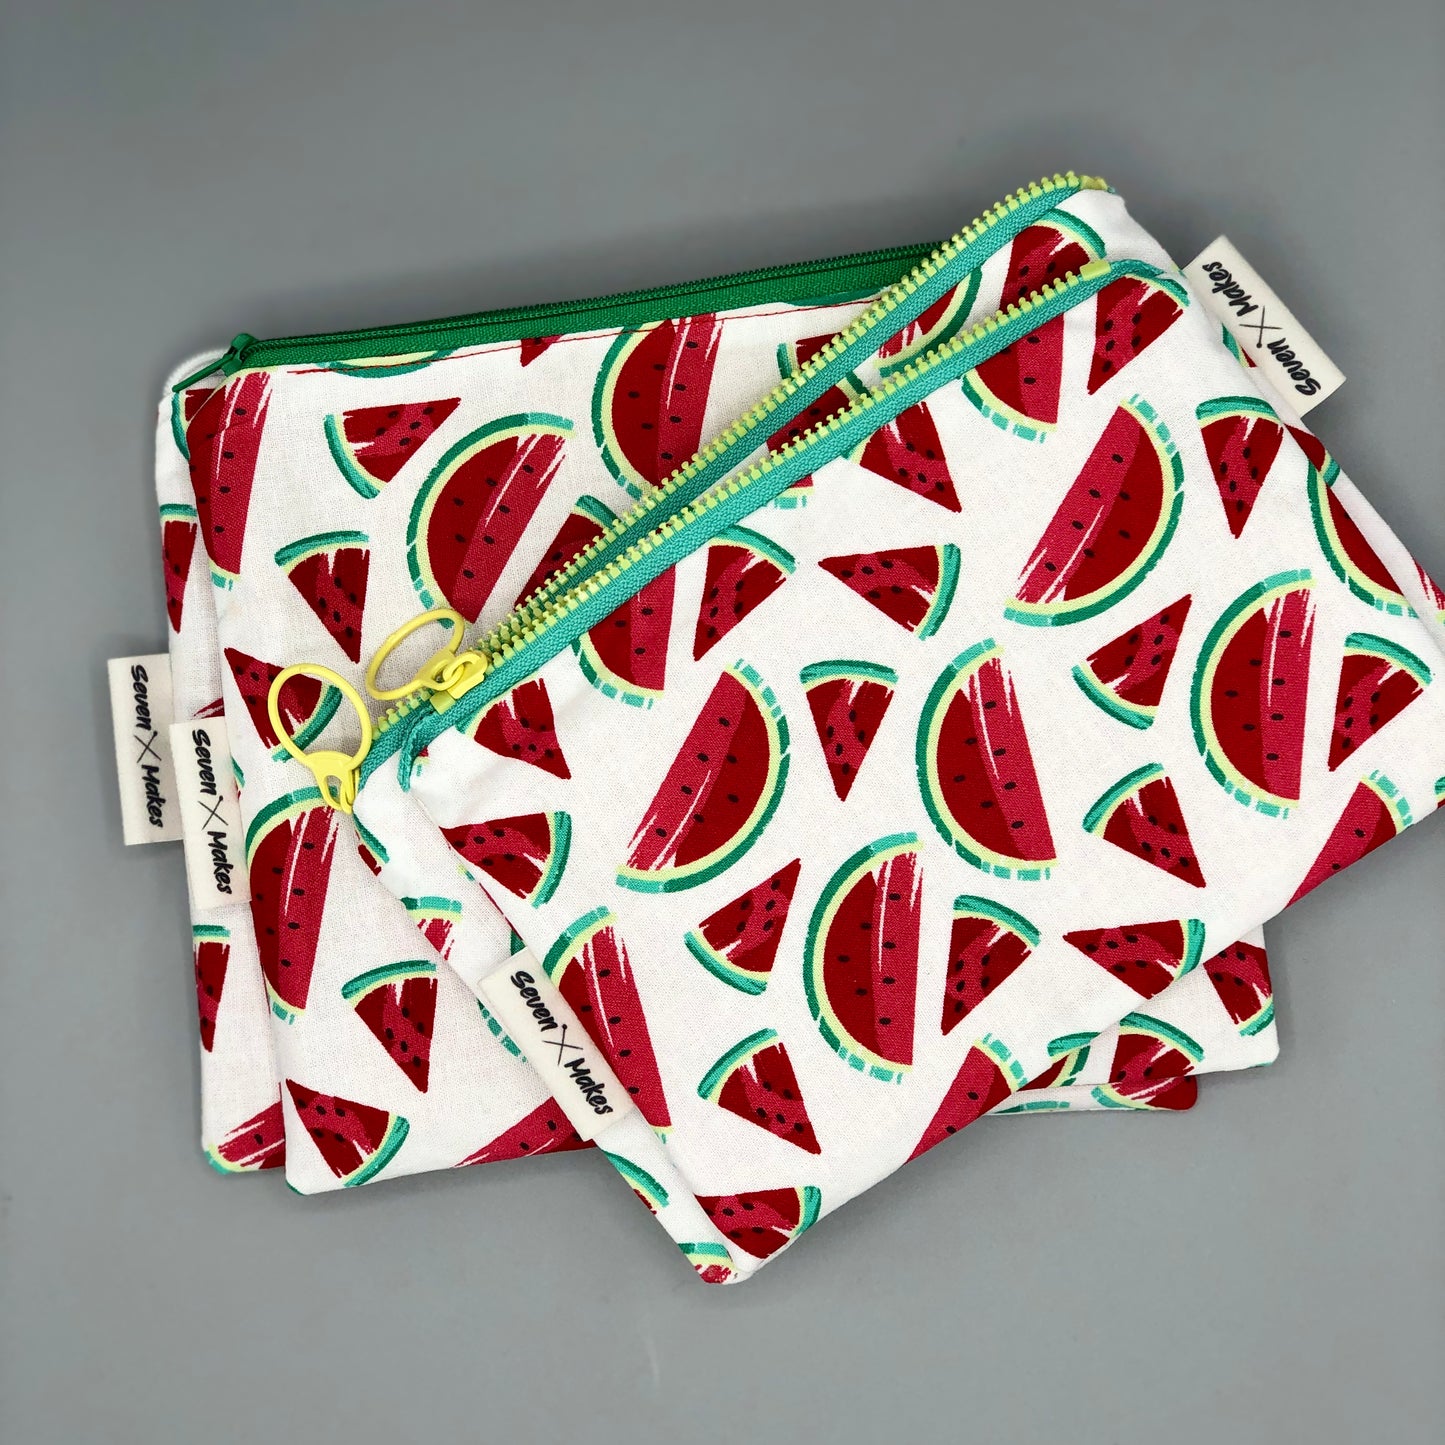 Watermelon zipper bags!